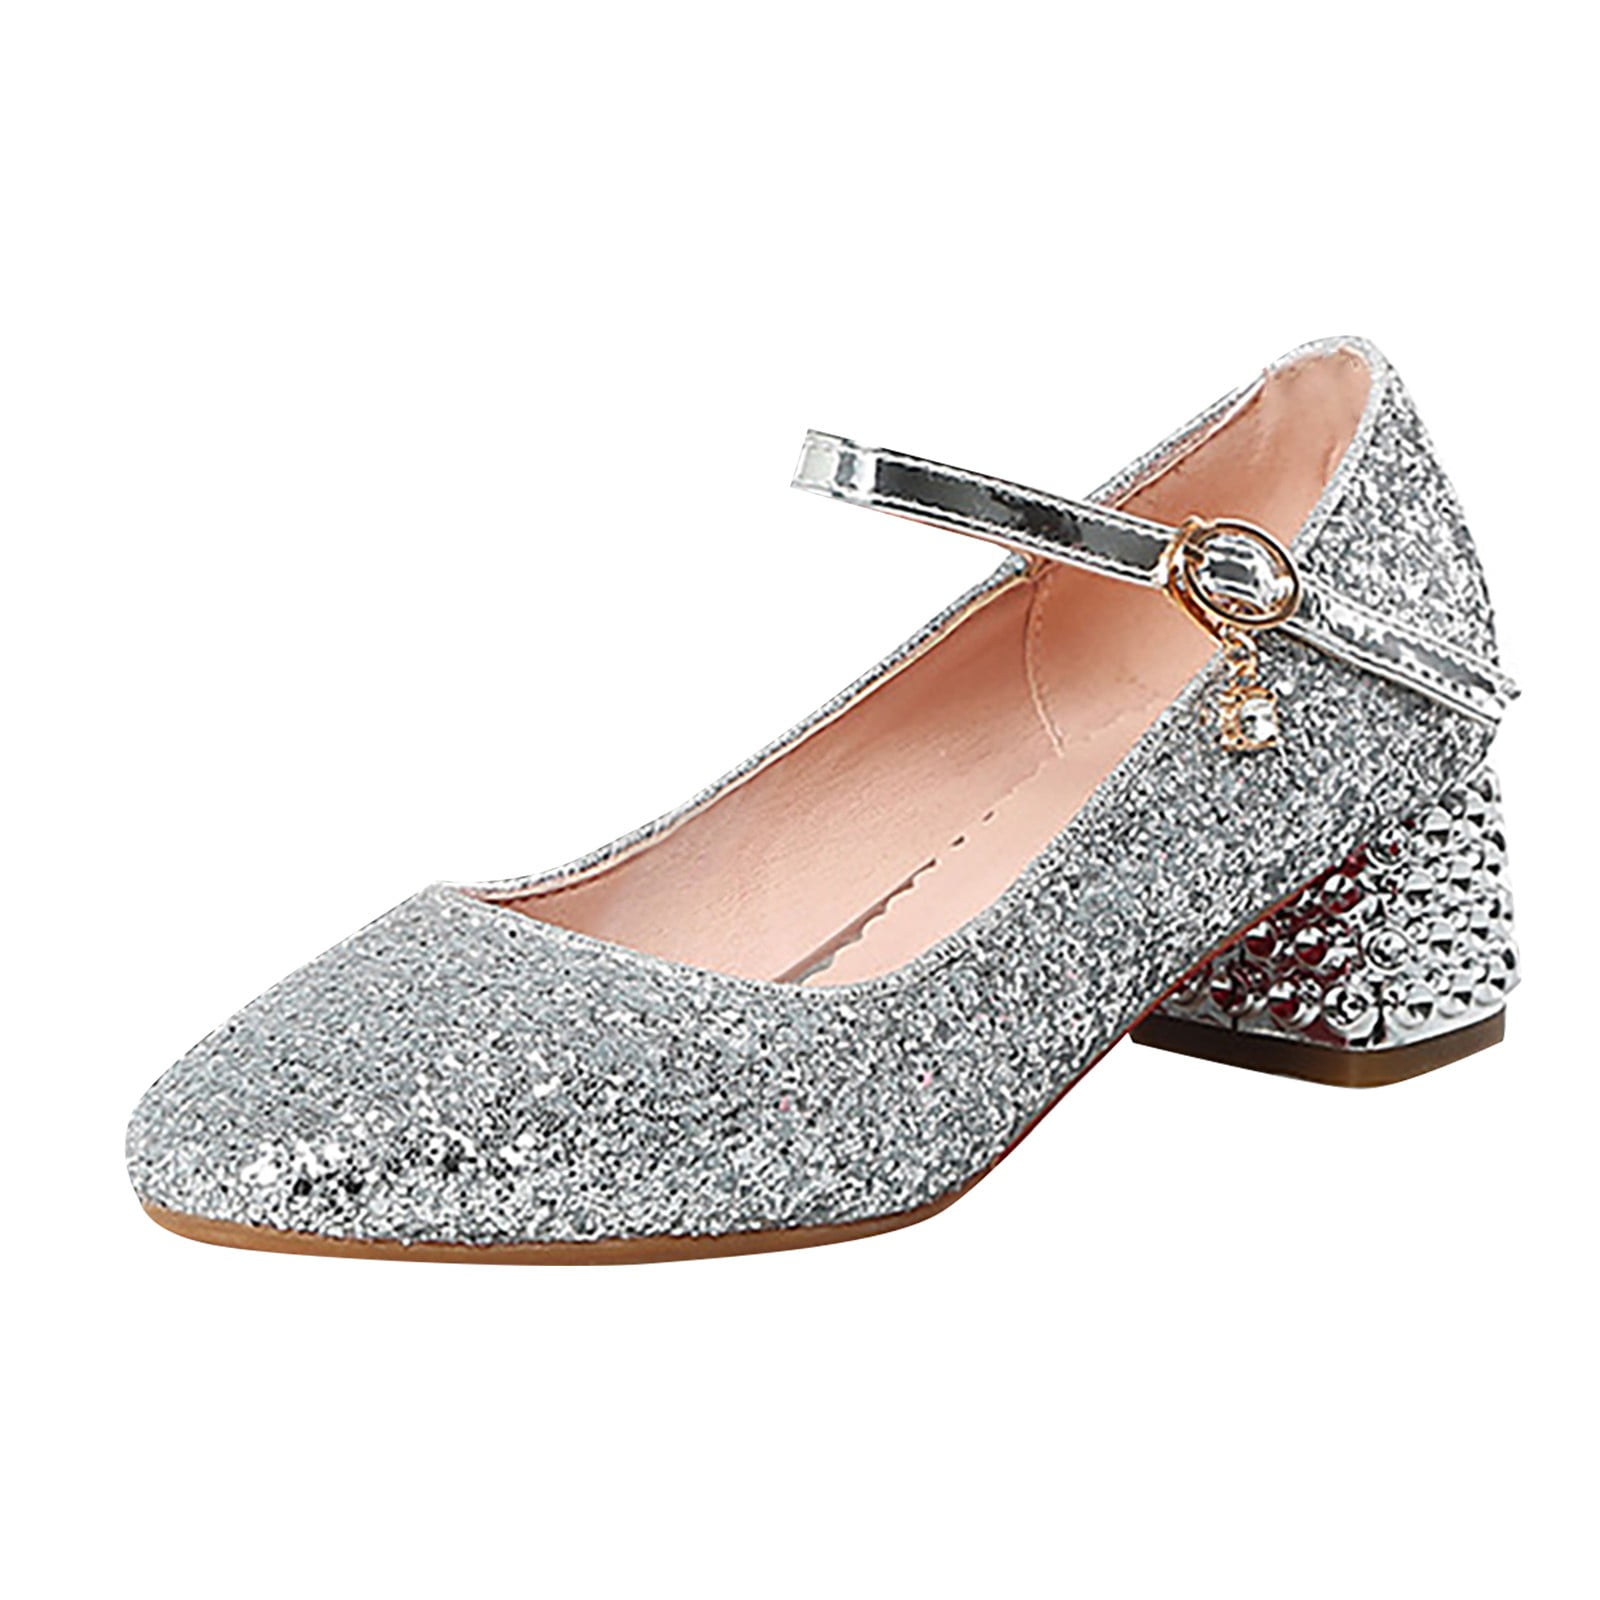 Badgley Mischka Girls Heel Dress Shoes With Bow – Elegant Girls' Pumps, Low  Heels, Flower Party, Wedding, Princess (little Kids) - Silver, 1 : Target